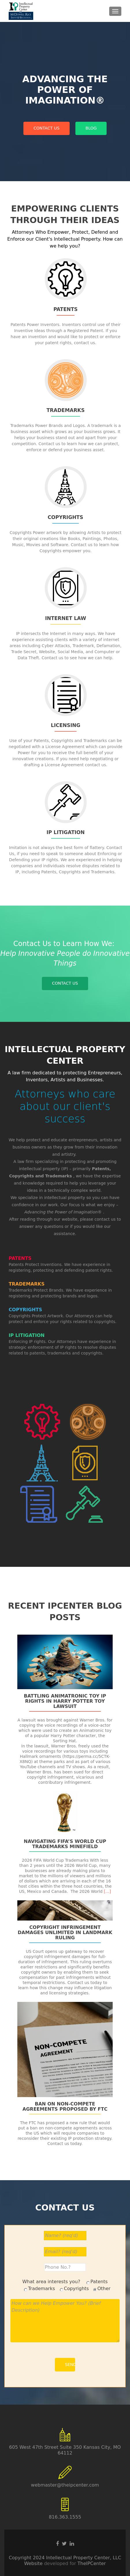 Intellectual Property Center, LLC - Overland Park KS Lawyers